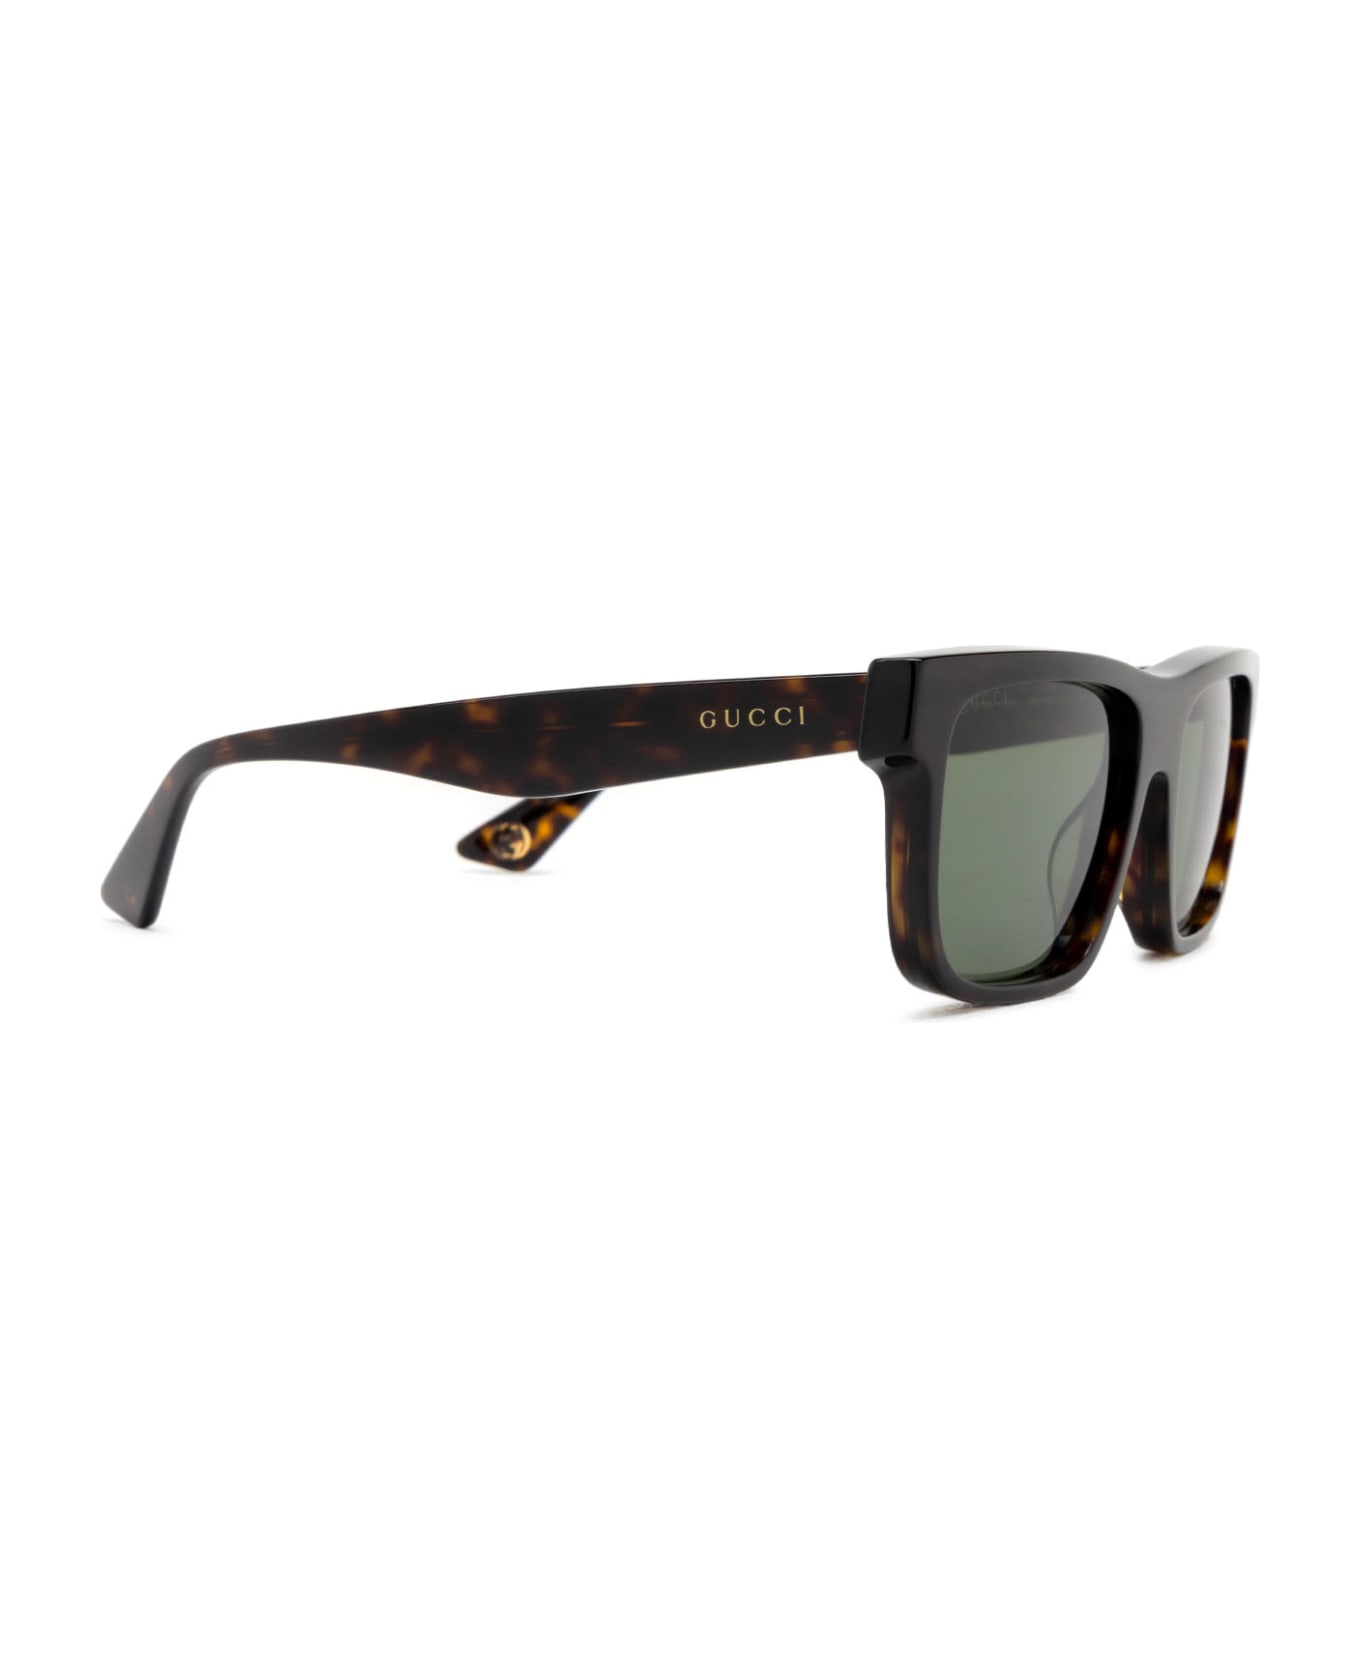 Gucci Eyewear Gg1618s Havana Sunglasses - Havana